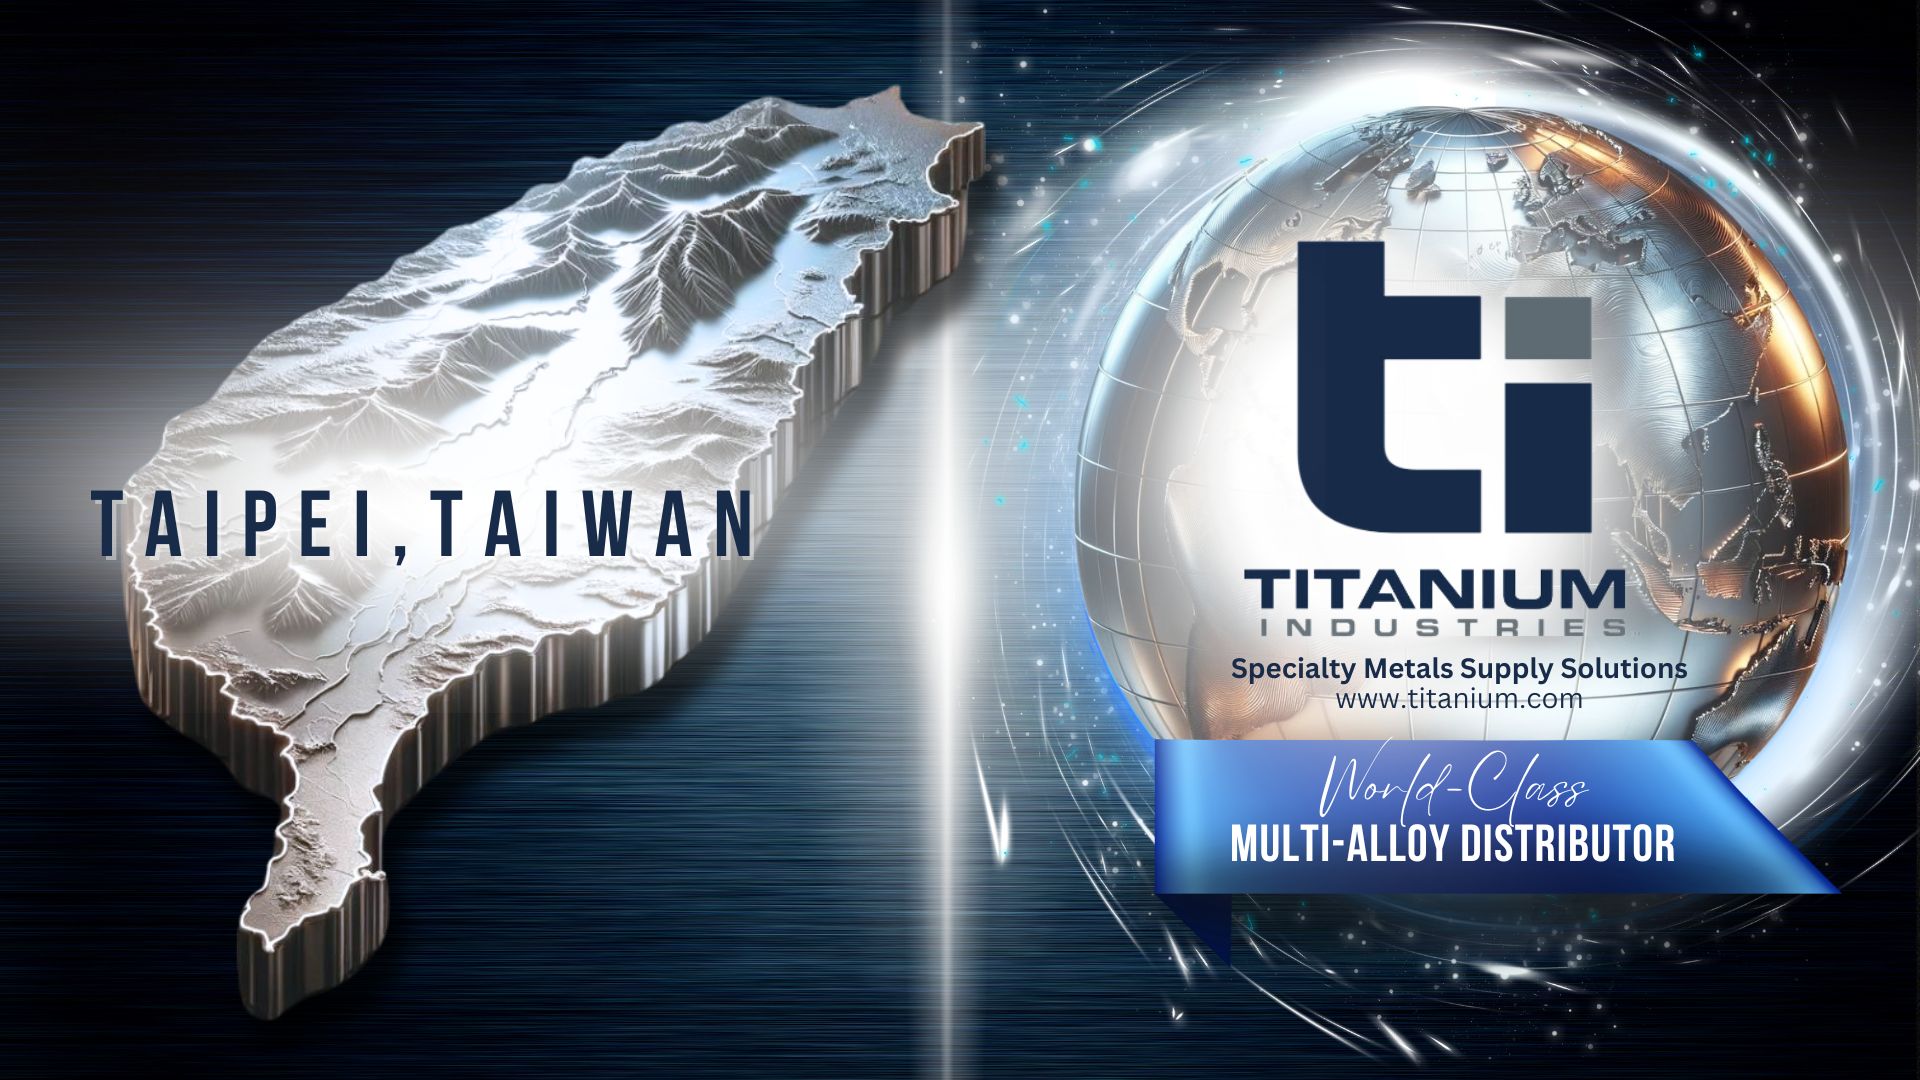 Titanium Industries Asia, Inc. Taipei, Taiwan